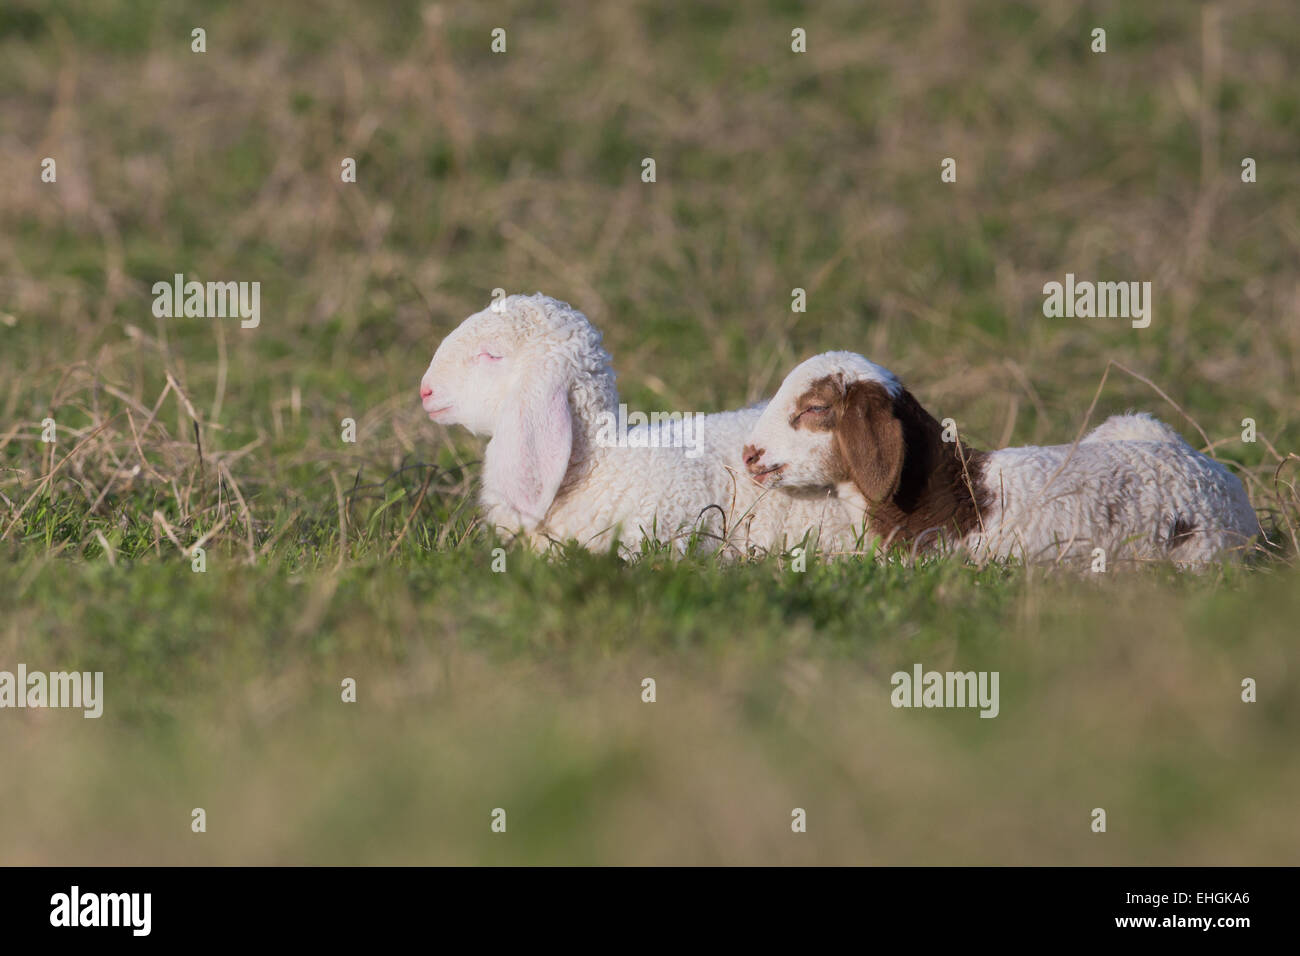 lambs sleeping Stock Photo